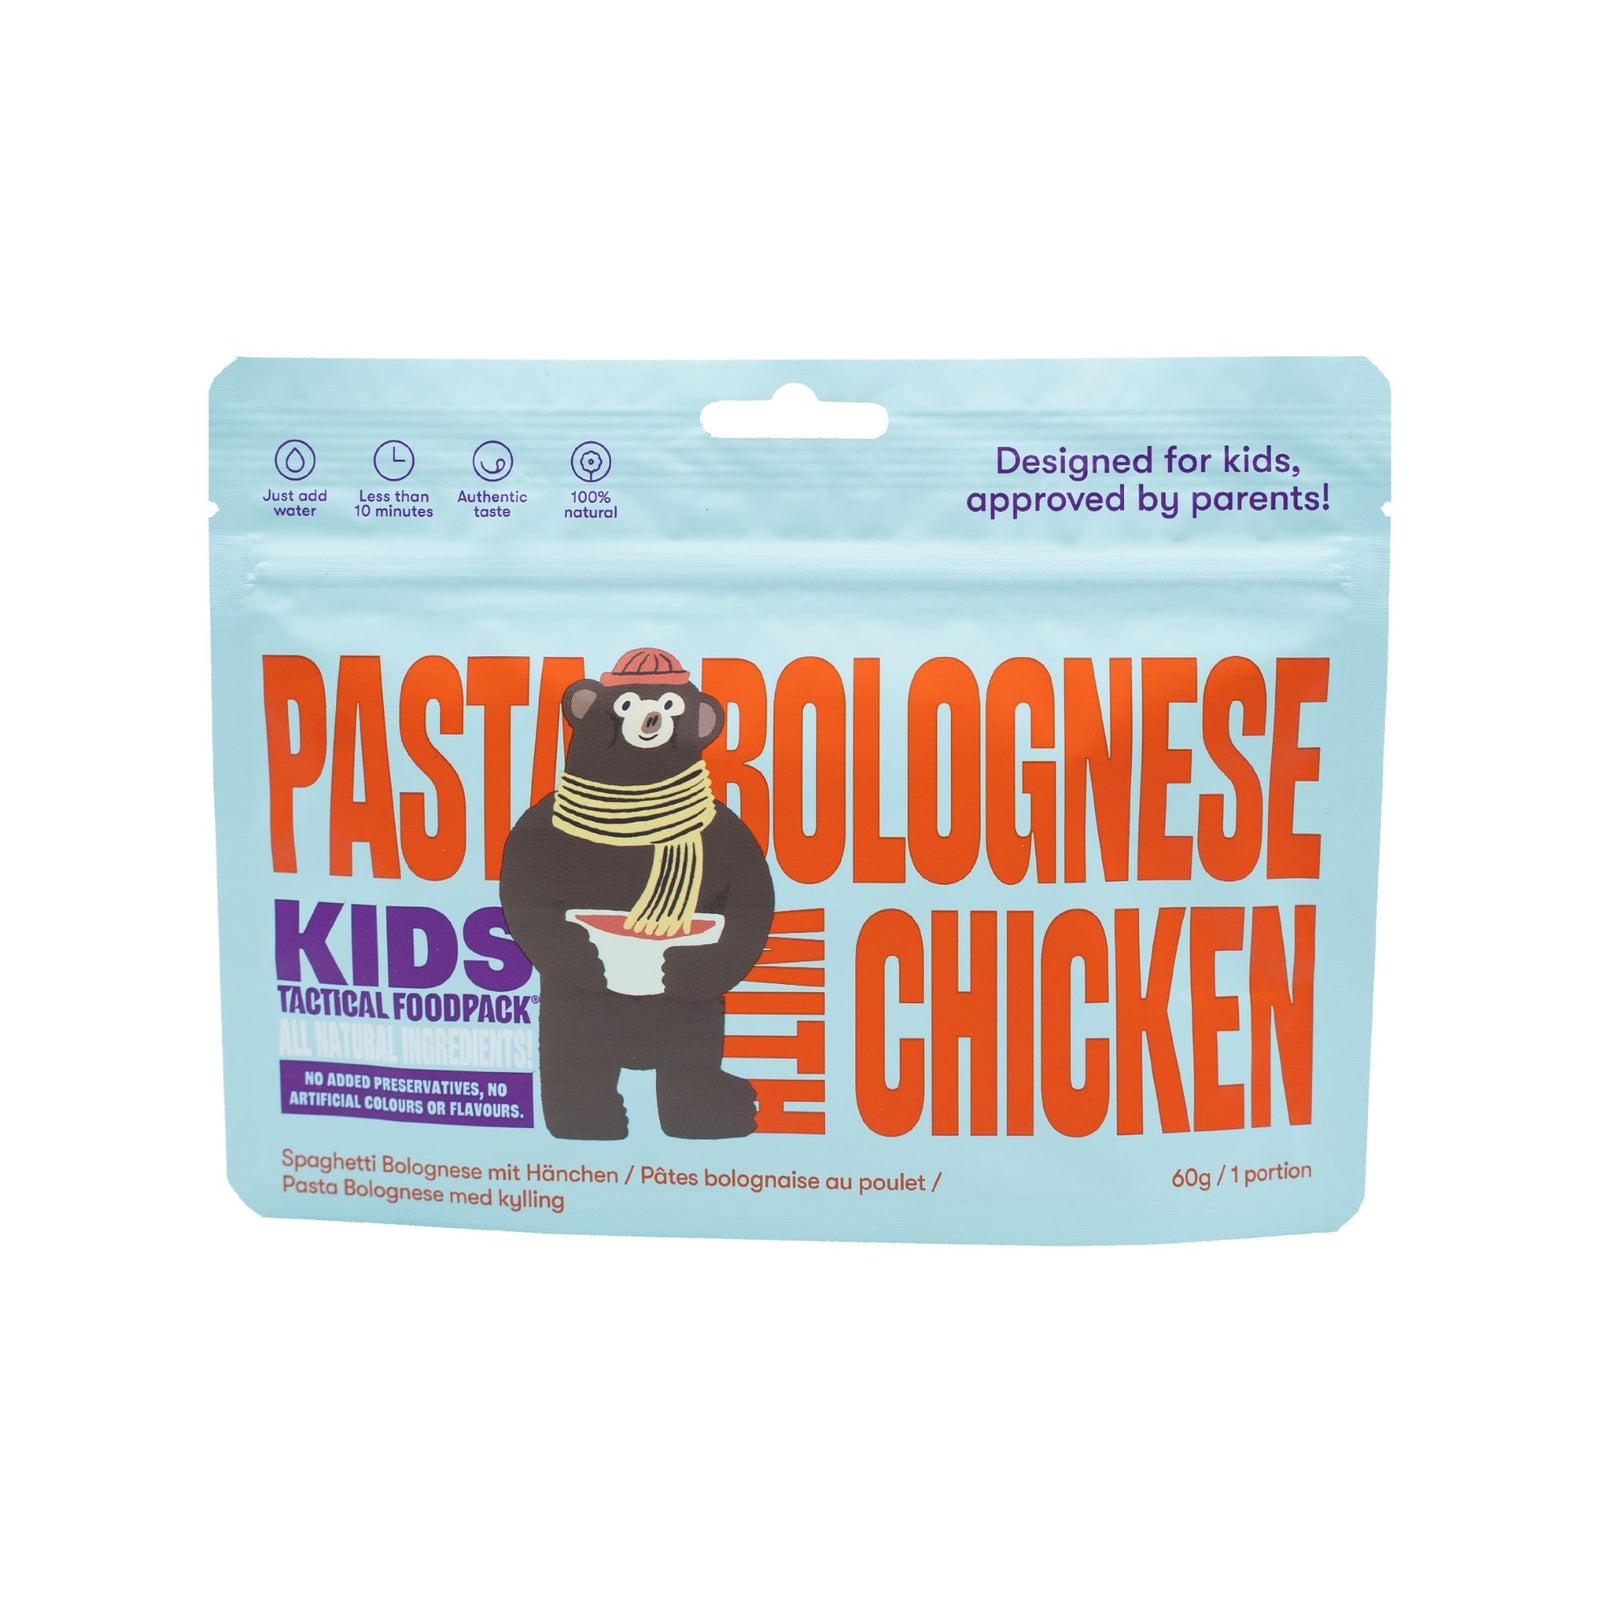 Tactical Foodpack | KIDS Pasta Bolognese with Chicken - Pasta alla bolognese con pollo